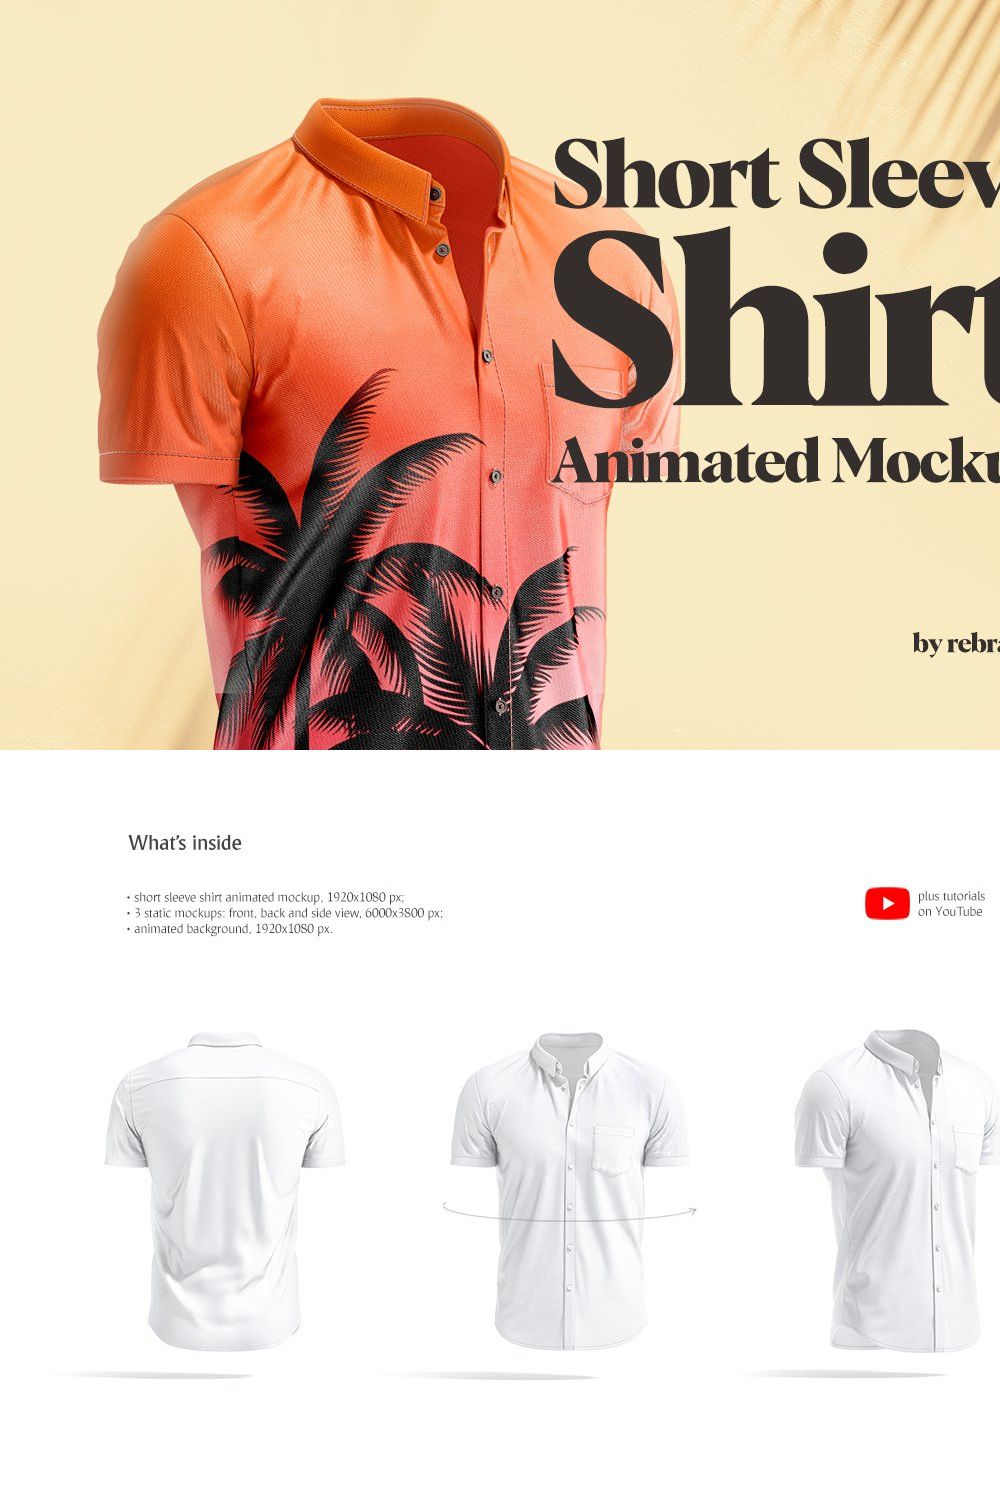 Short Sleeve Shirt Animated Mockup pinterest preview image.